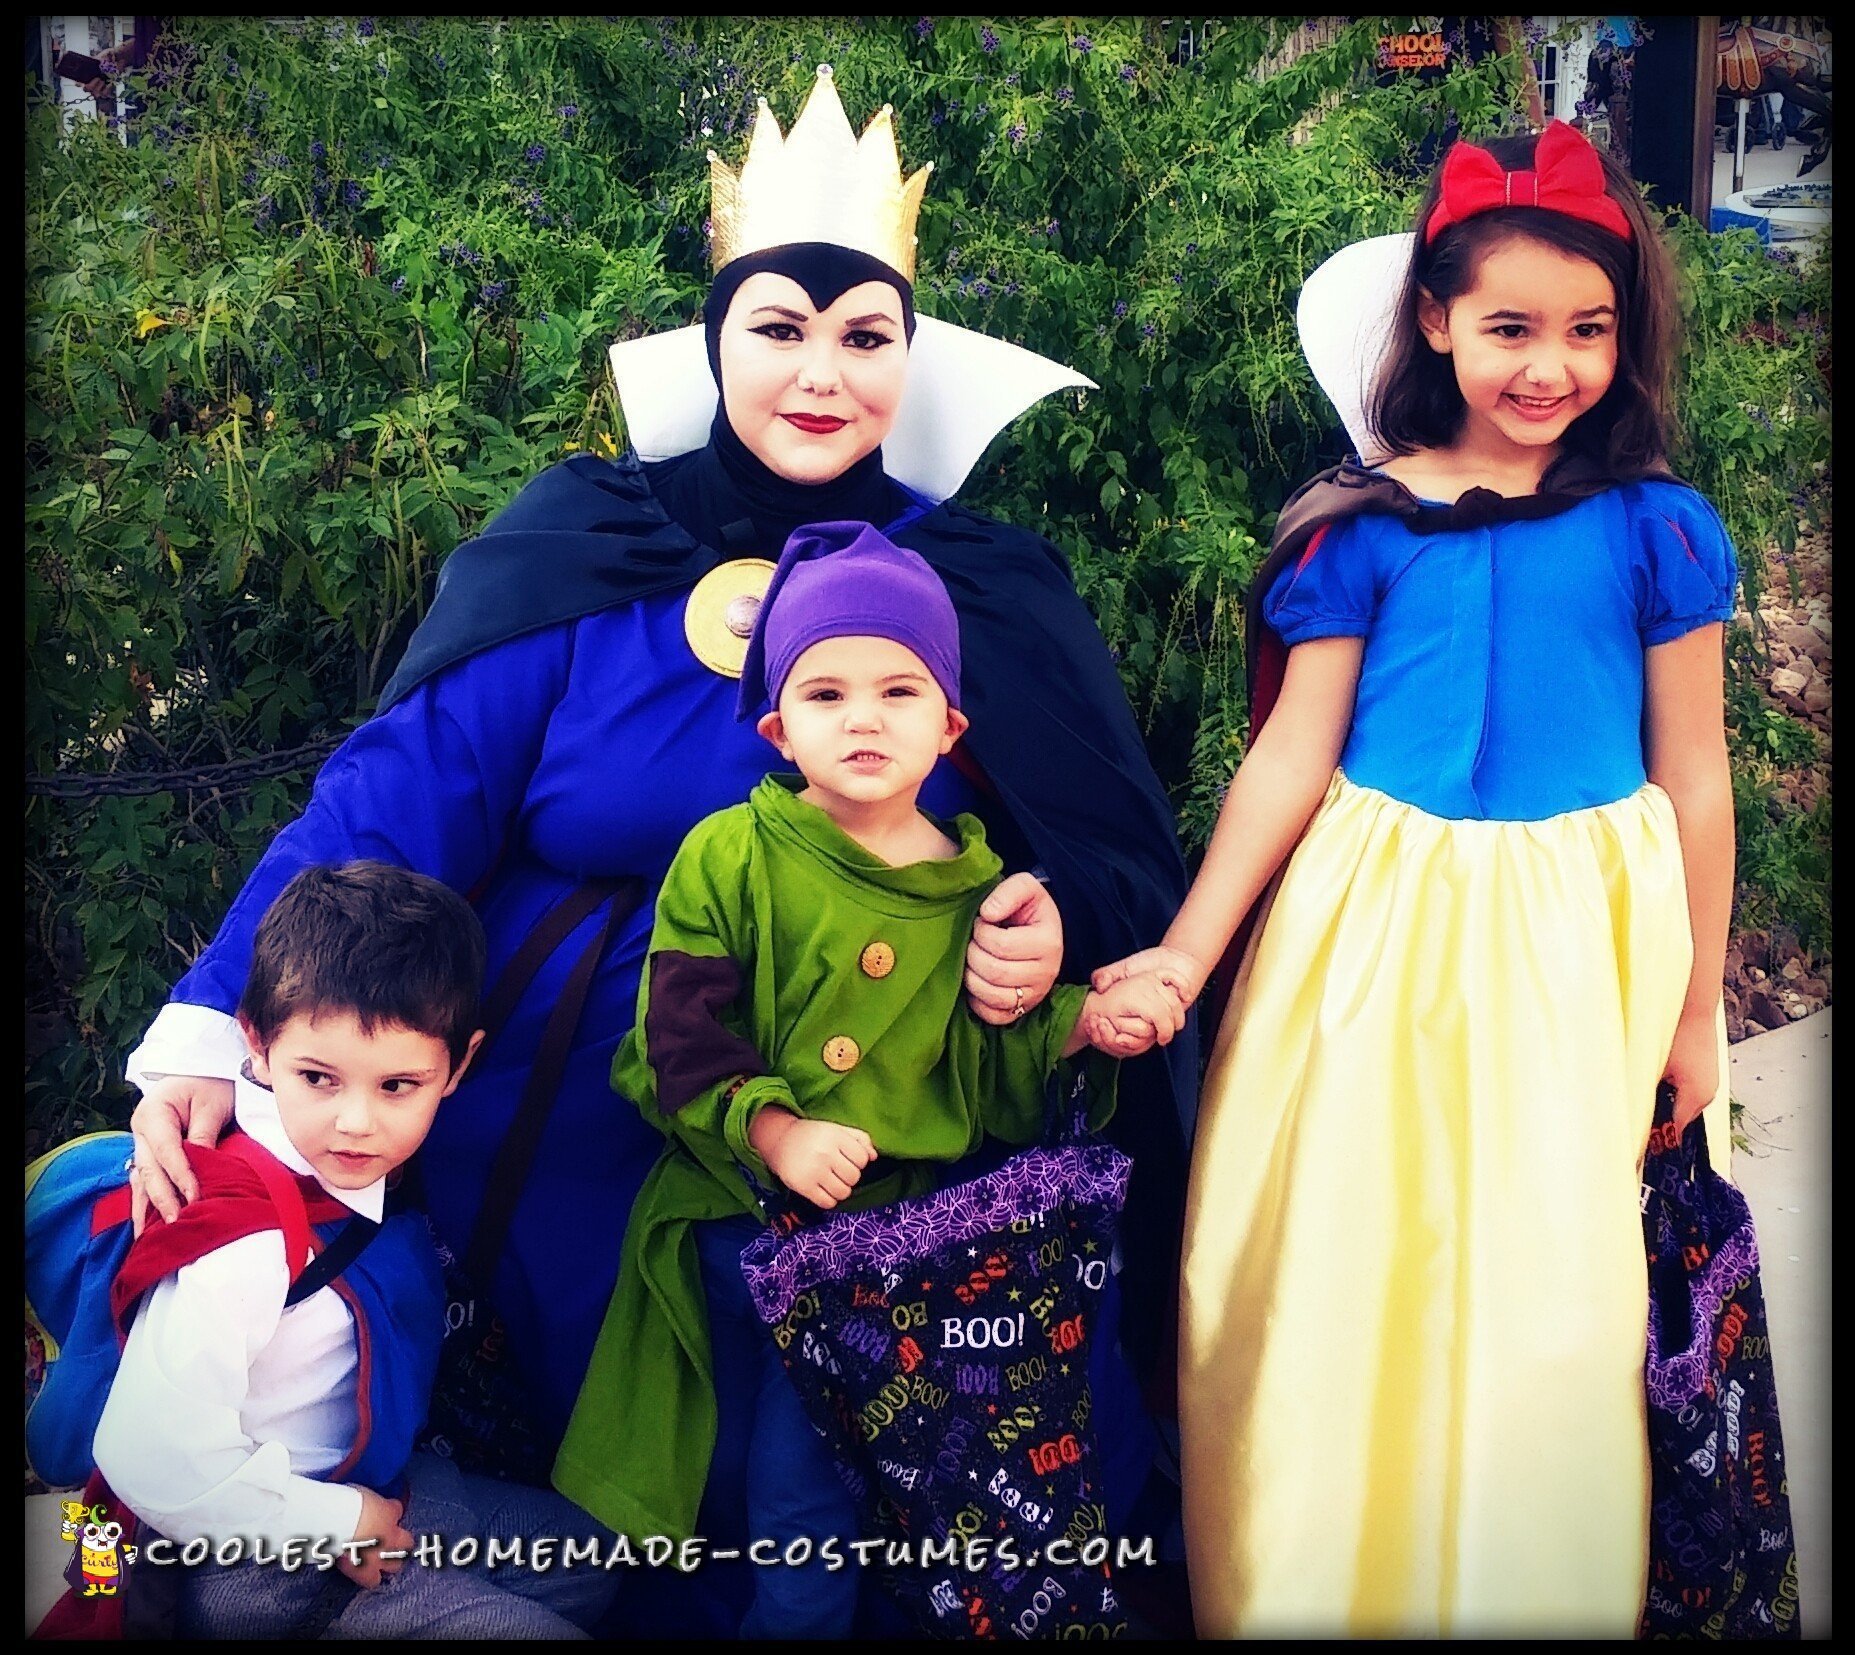 Snow White Adult Costume, Disney Princess, Disney Costume Inspired, Snow  White Dress Movie Disney, 